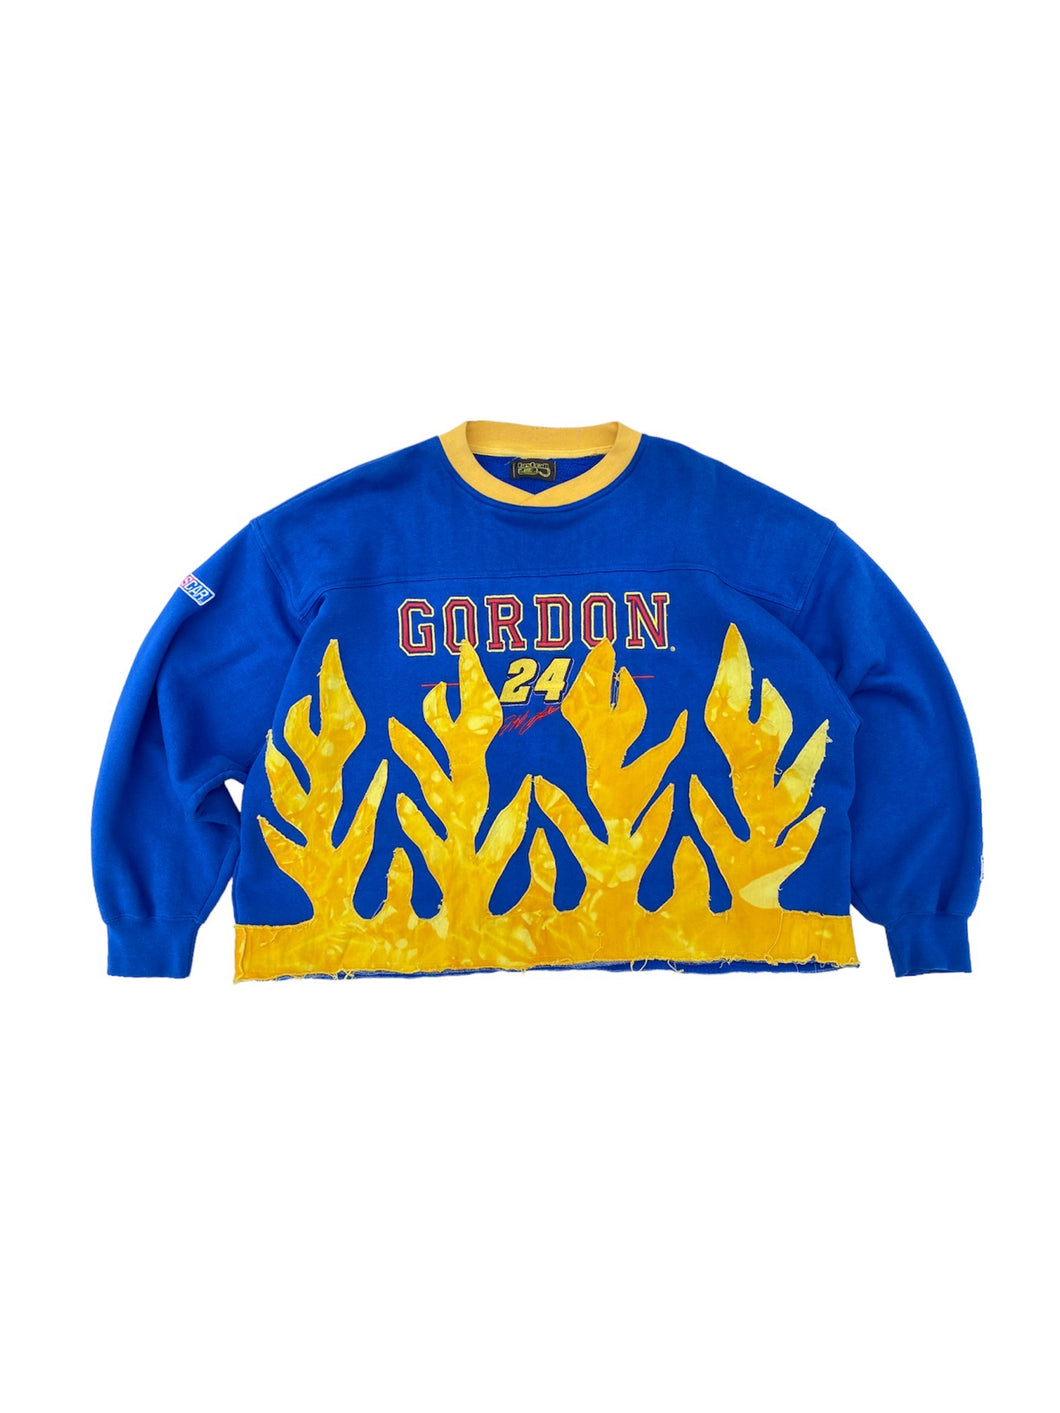 jeff gordon flame sweater